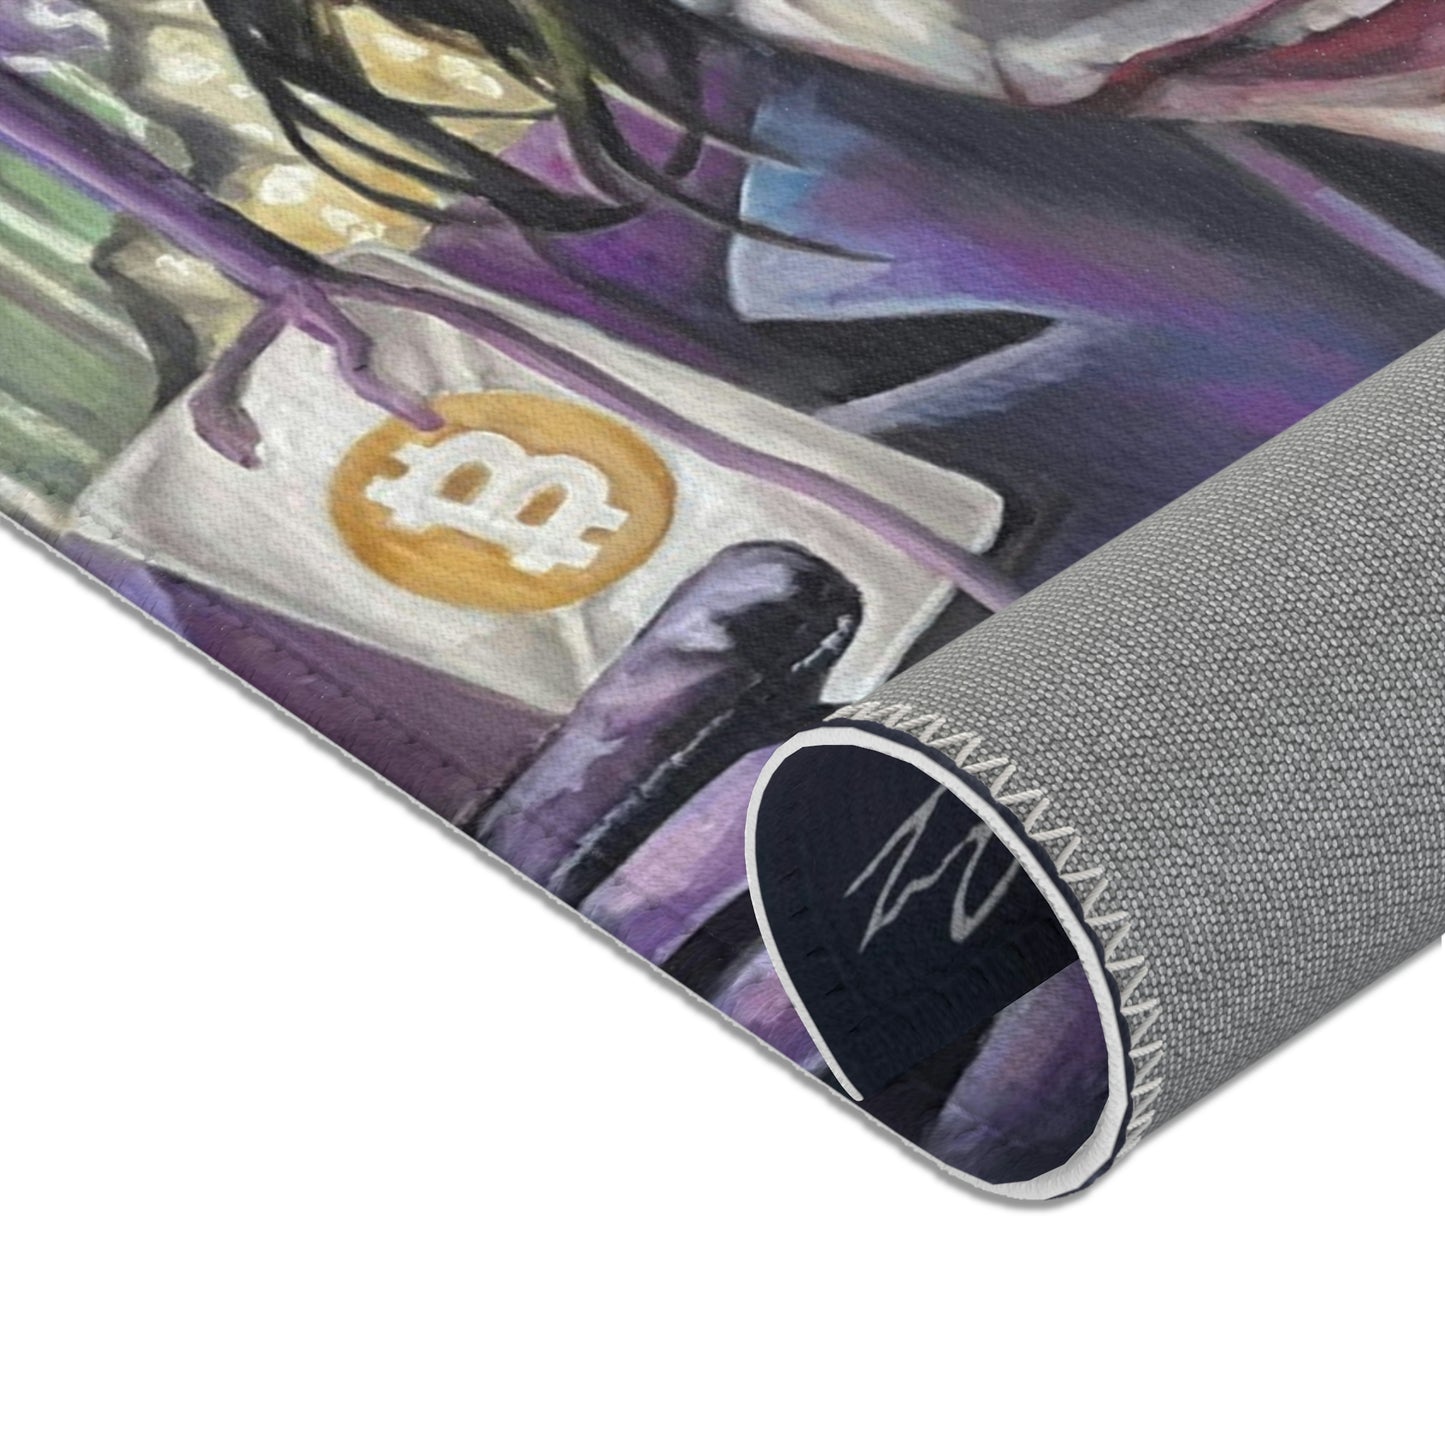 Joker - Signed Collectors Rug